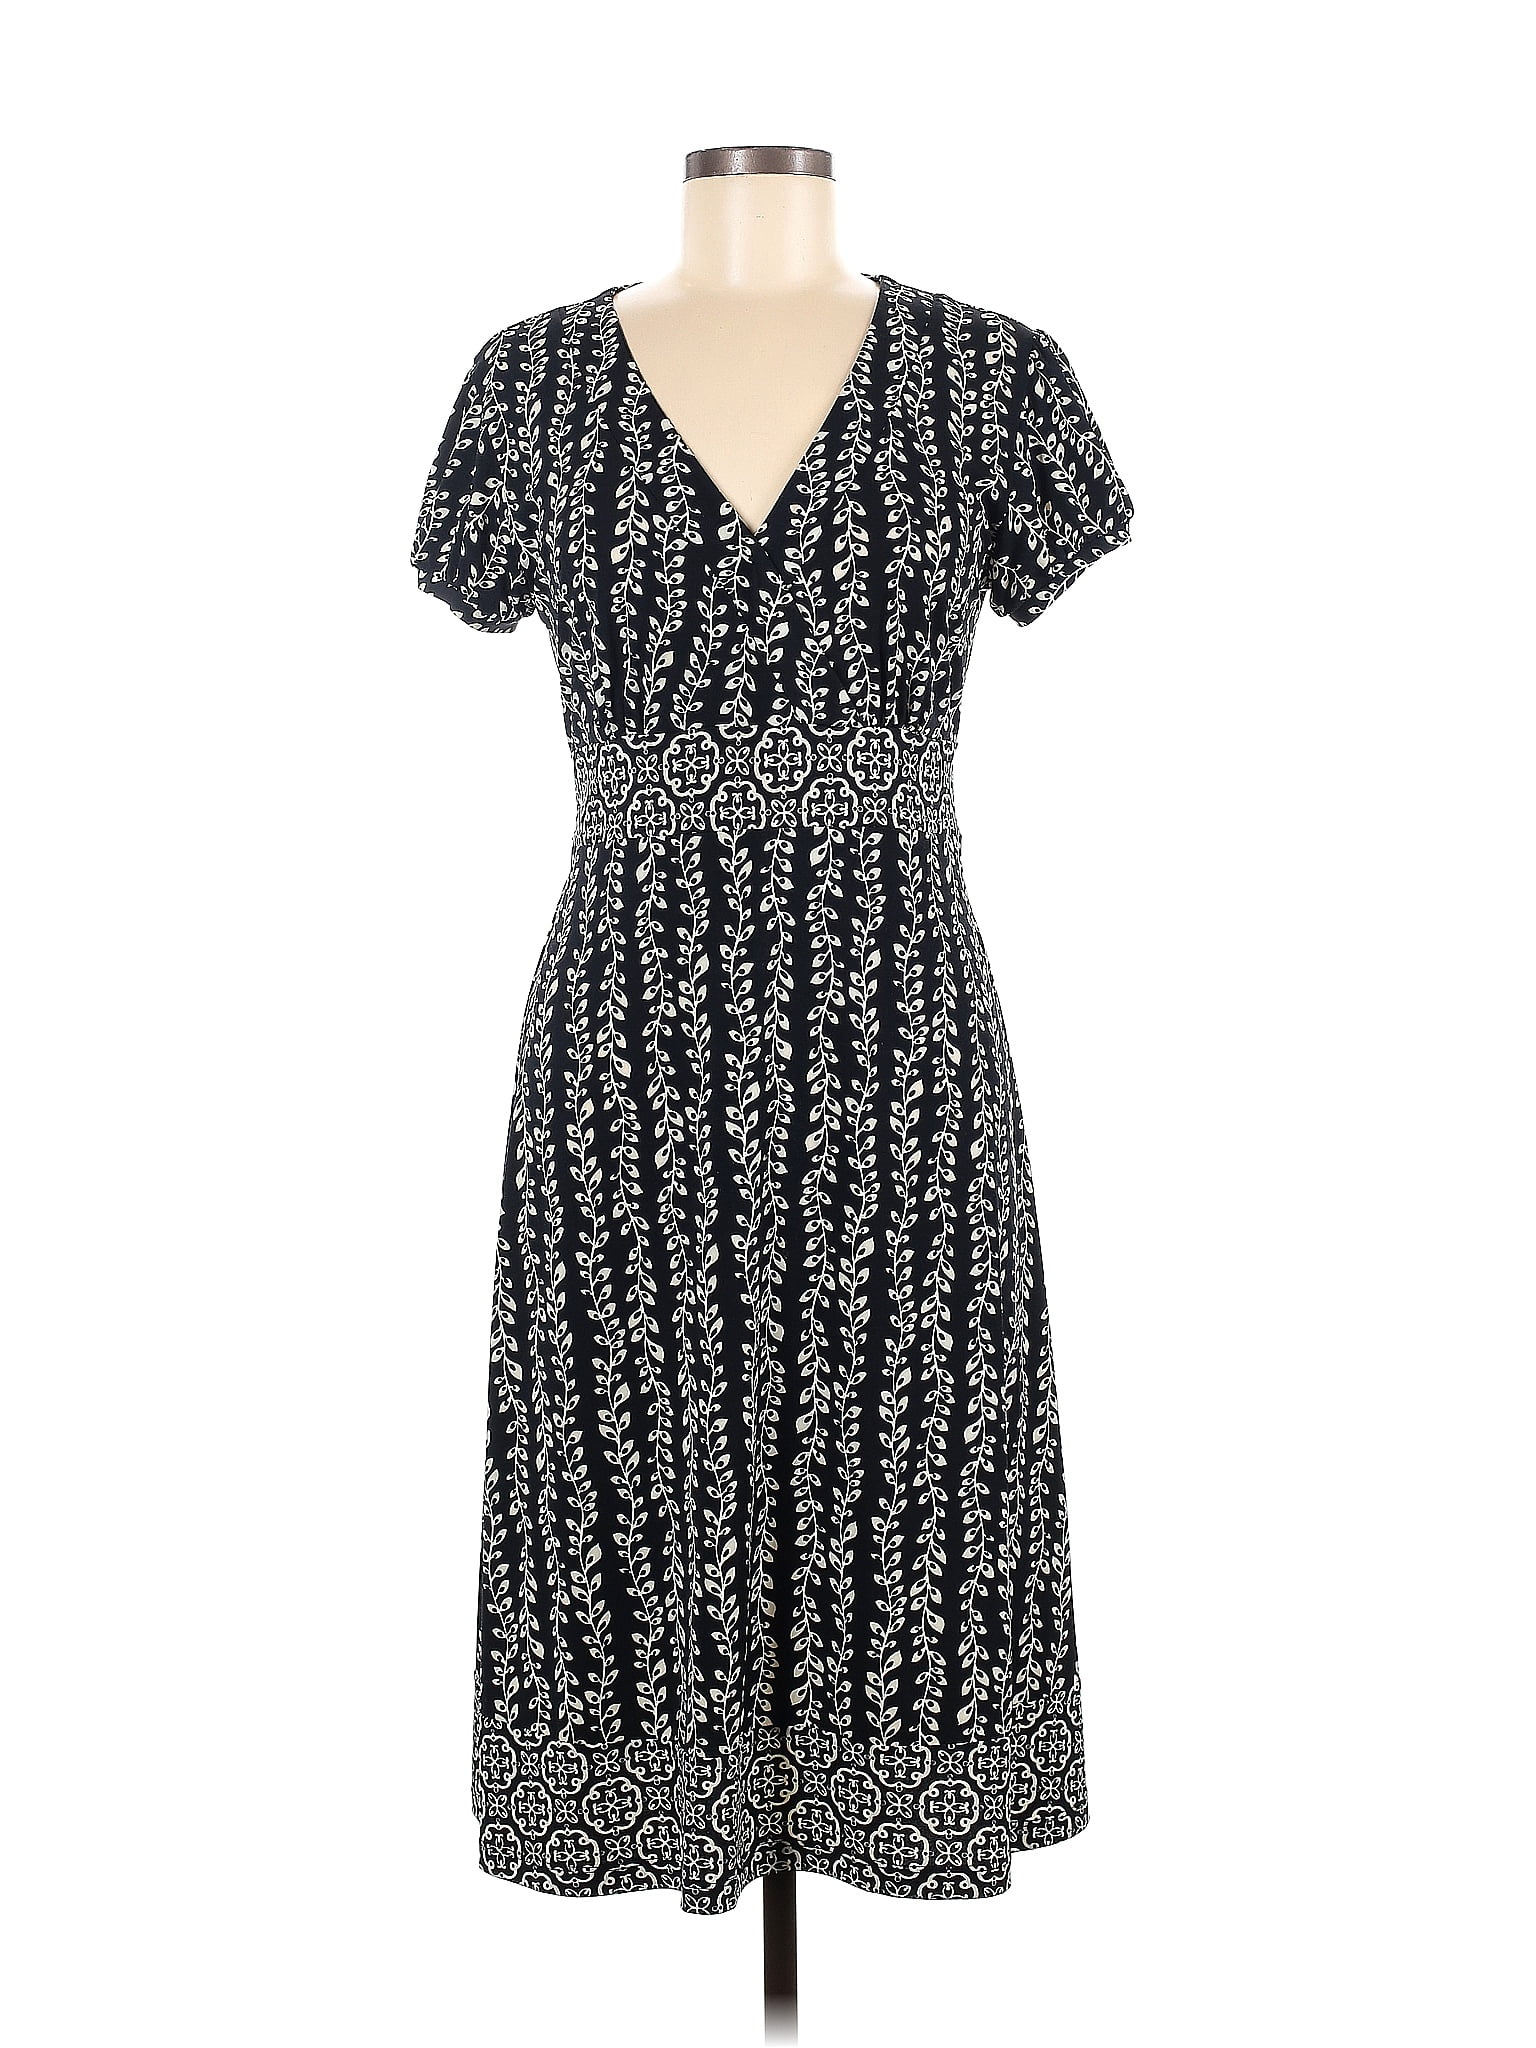 Apt. 9 Multi Color Gray Casual Dress Size M (Petite) - 59% off | ThredUp